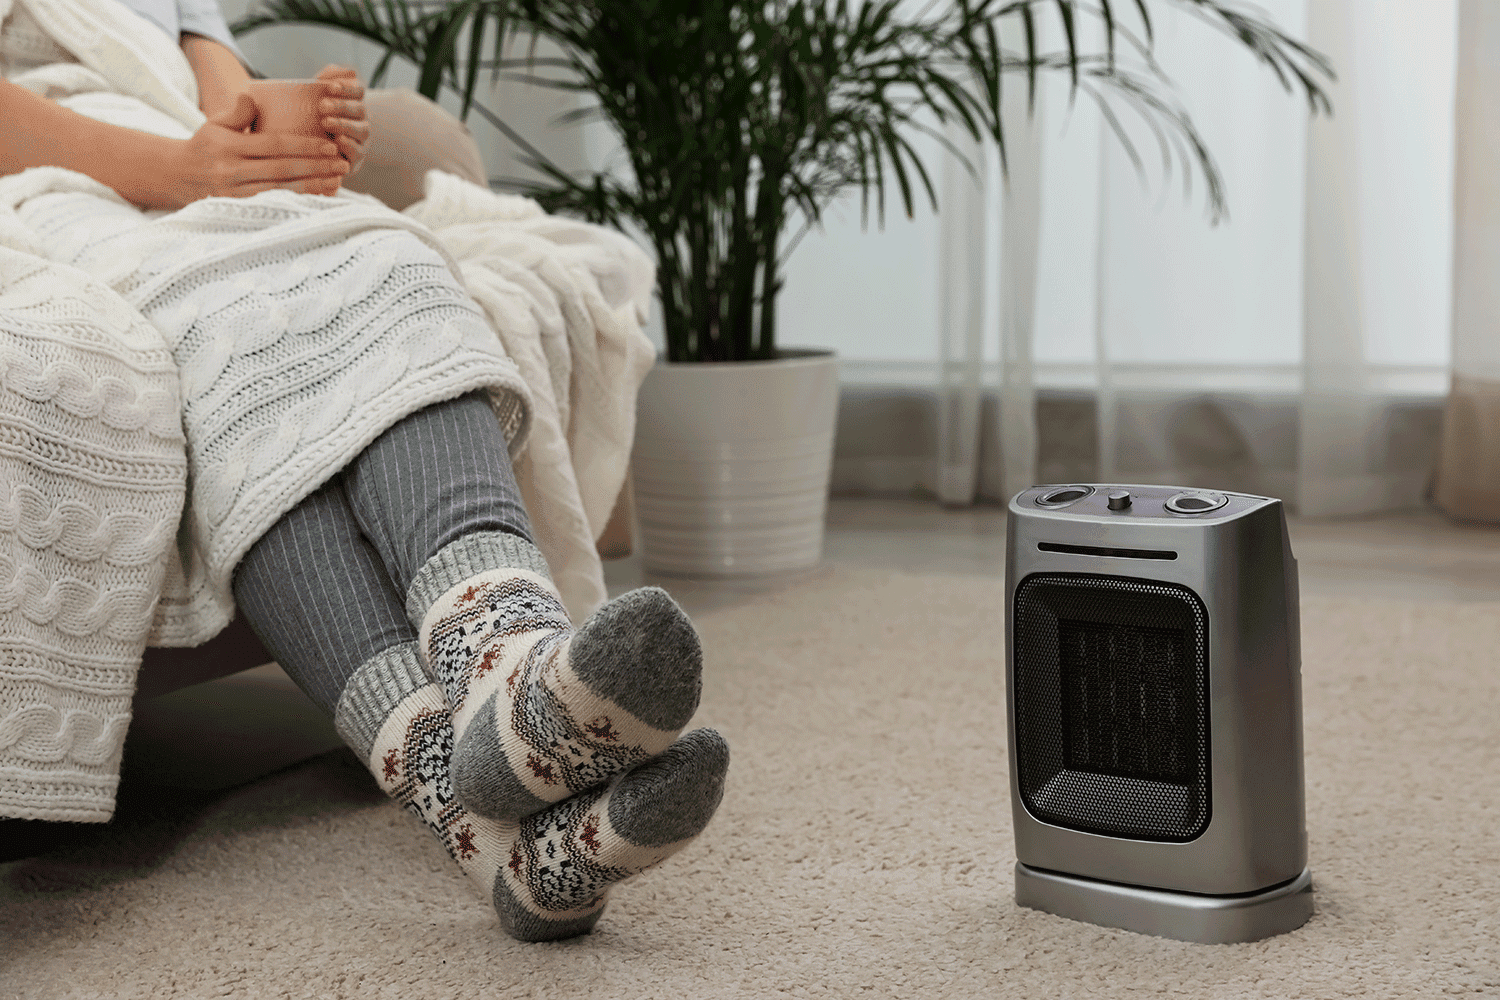 Woman warming legs near halogen heater at home